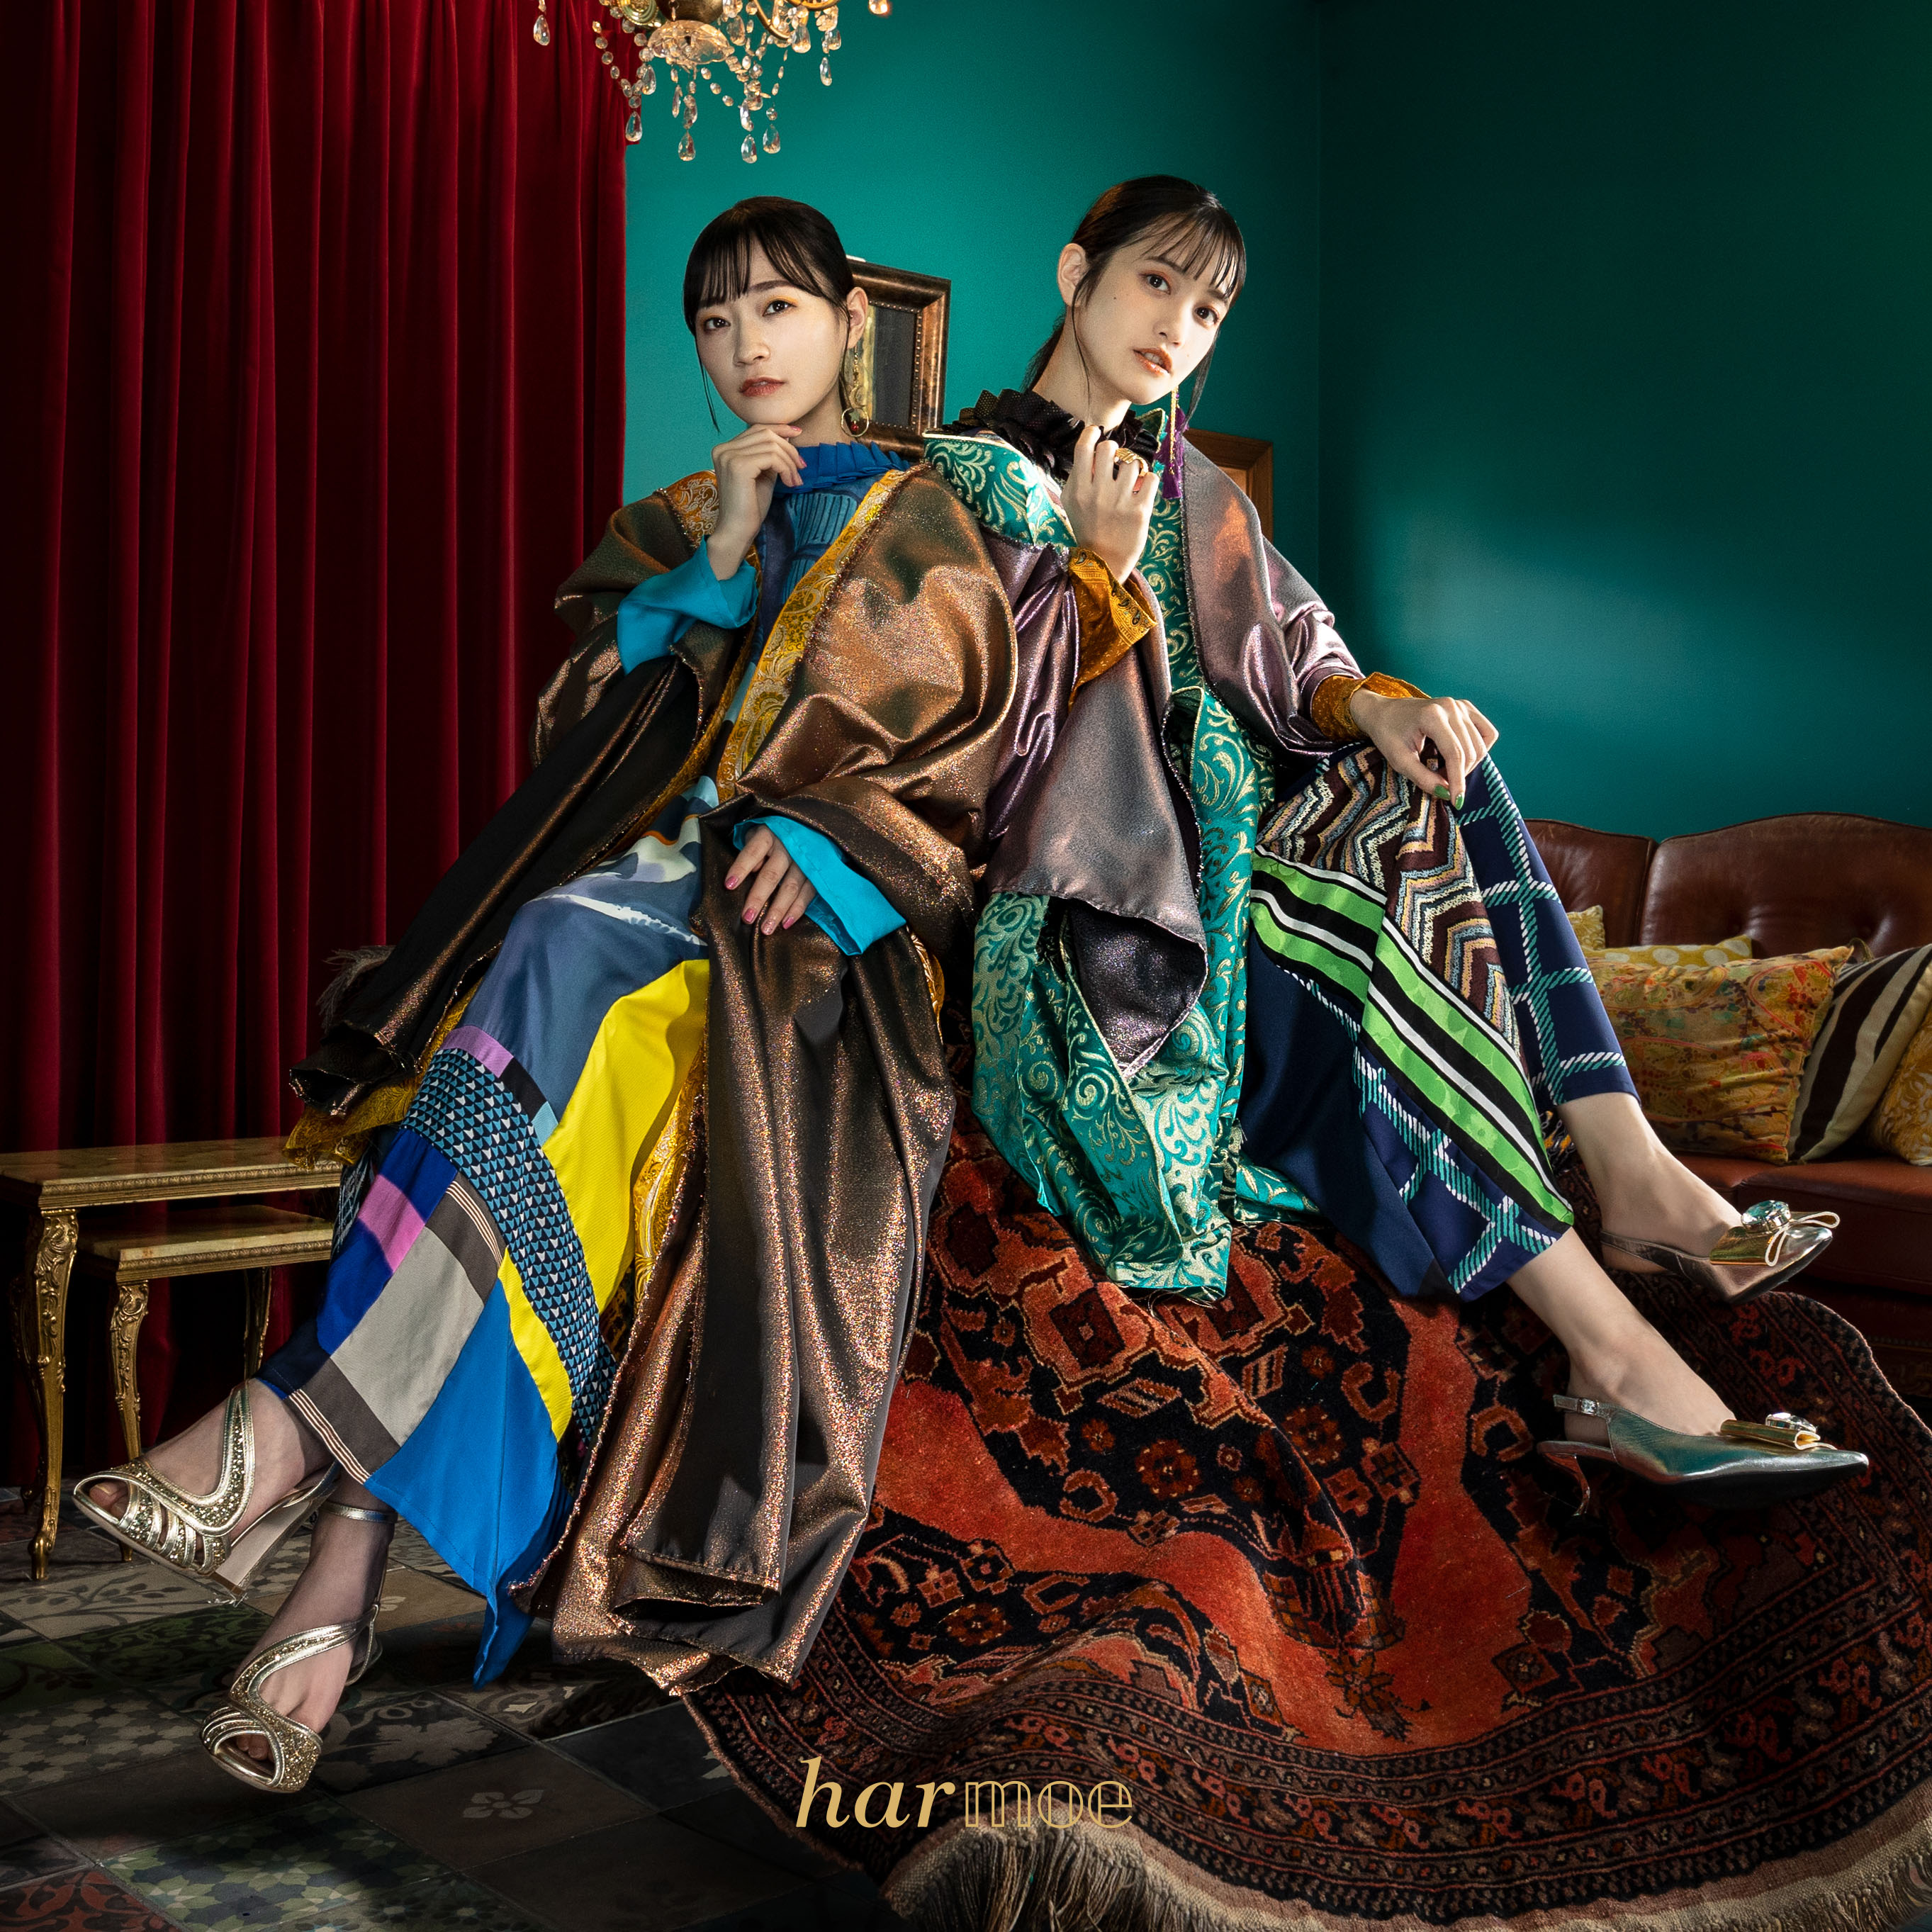 harmoe 3rd single "Arabian Utopian" Normal Edition(CD only) Release on Dec 22nd 2021